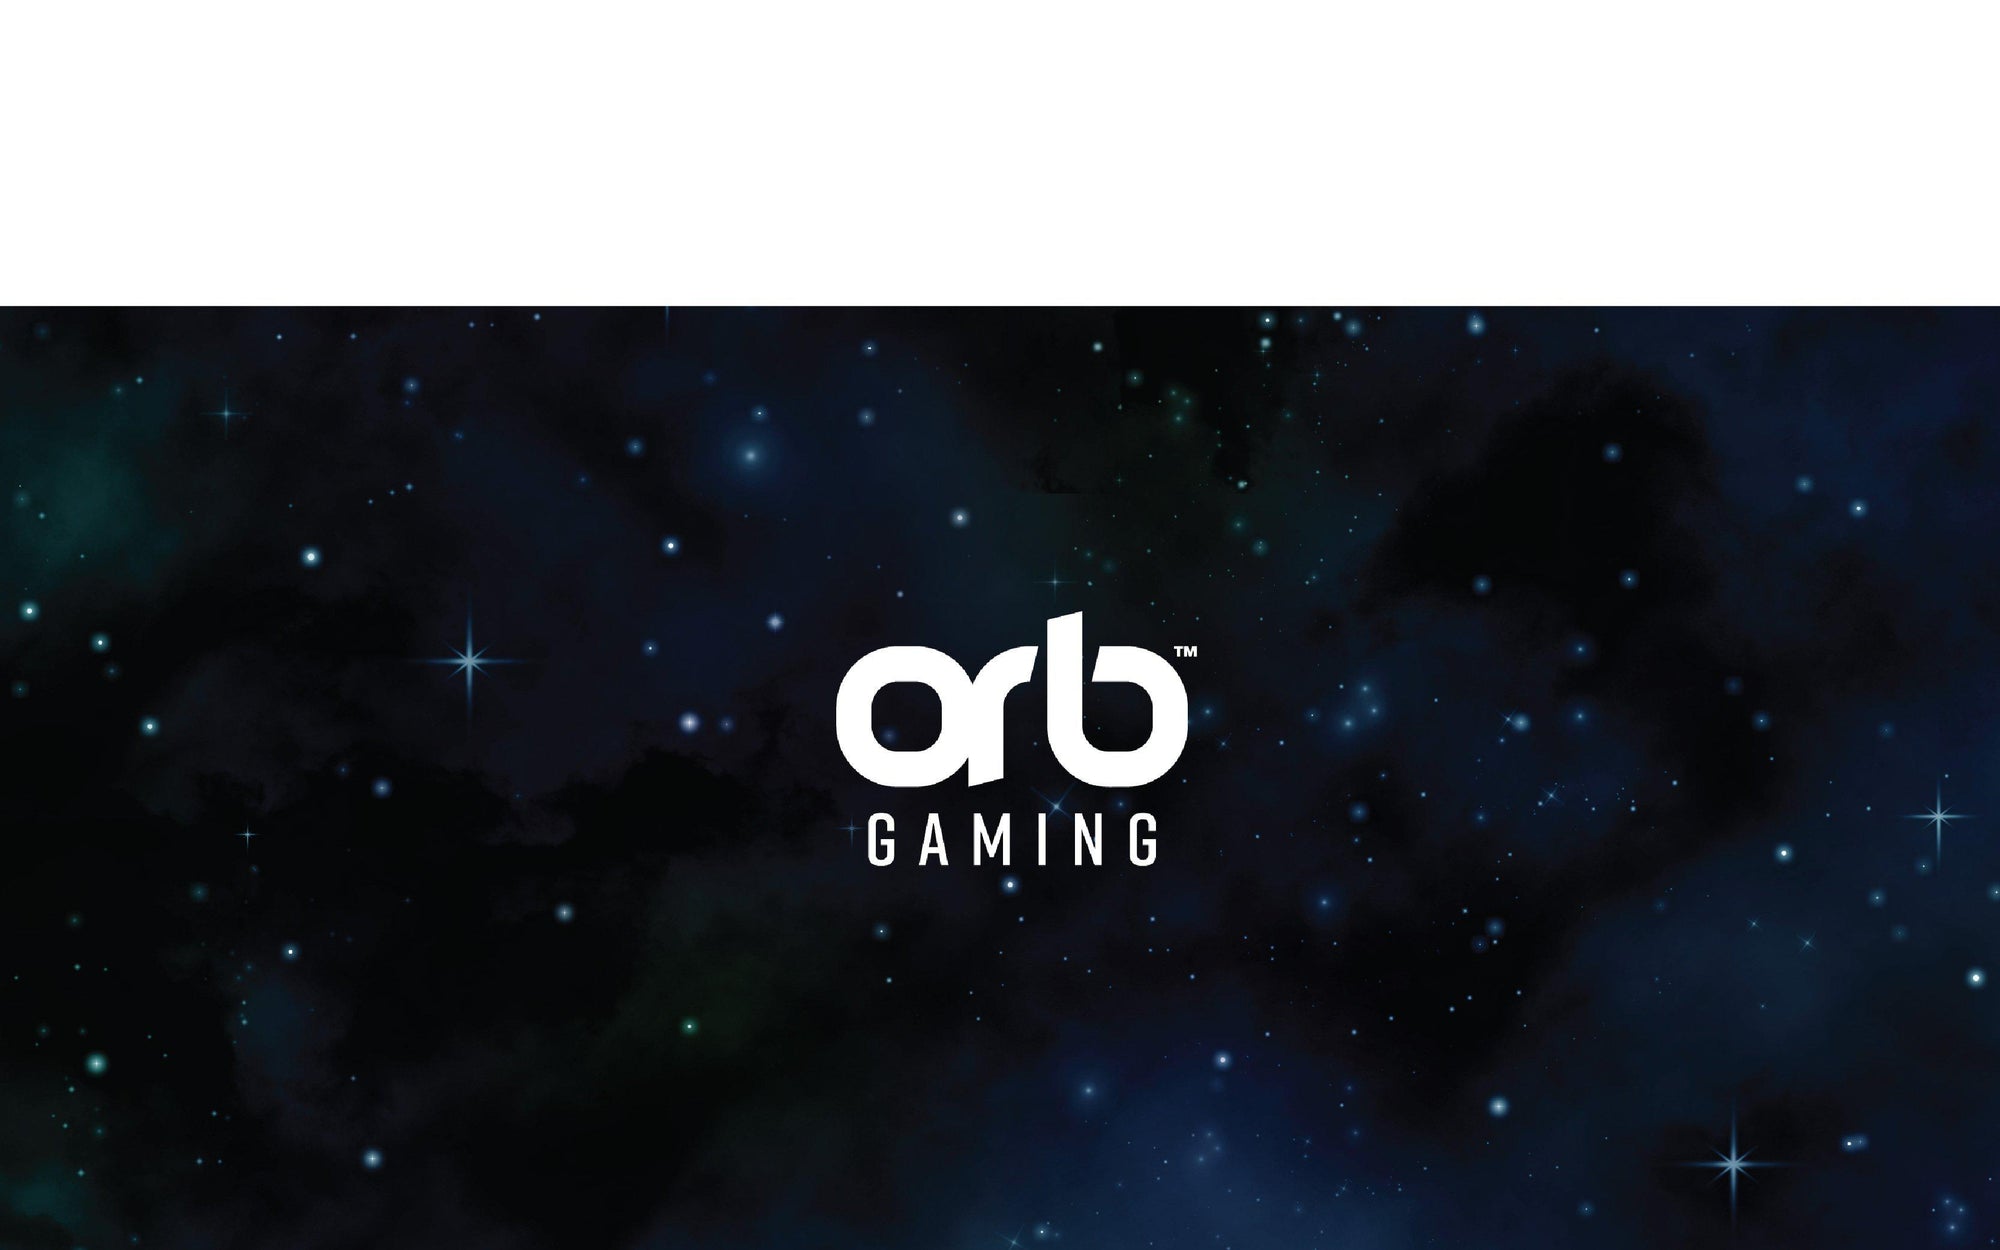 Orb Gaming